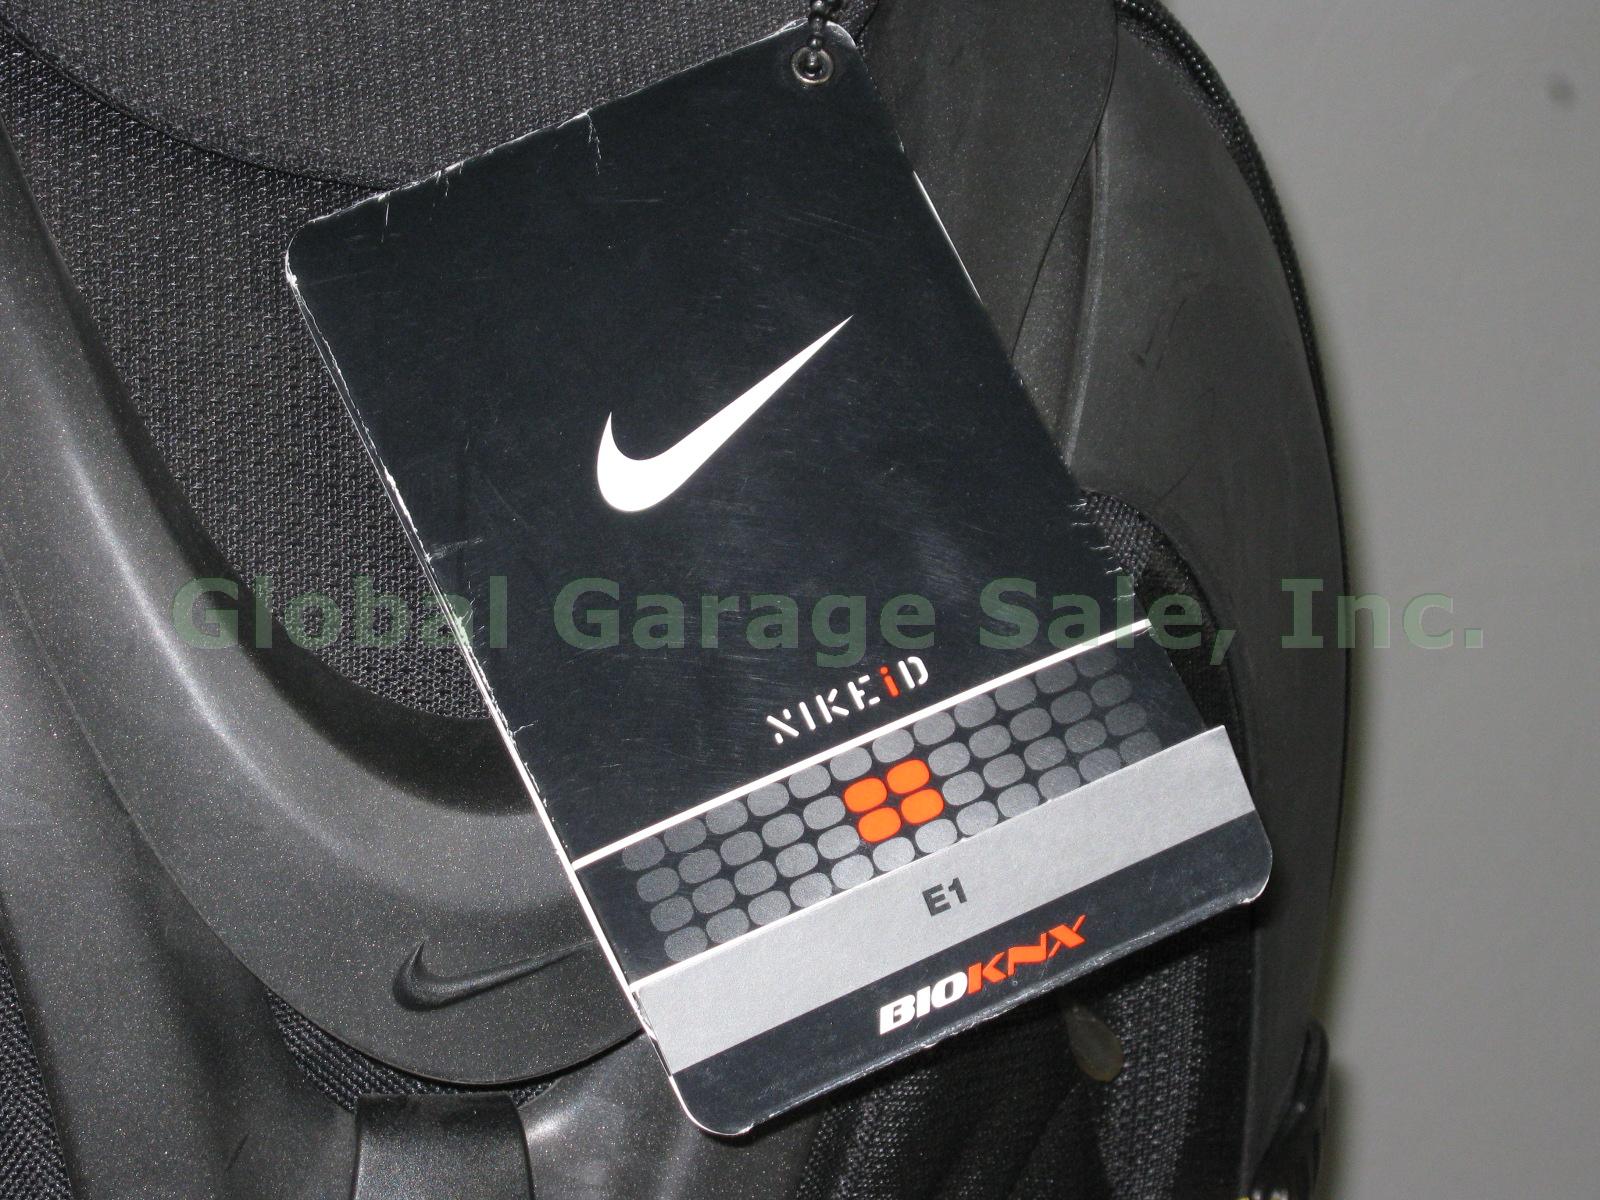 NOS New Old Stock Nike Epic E1 BioKNX Backpack With Tags Exoskeleton Hardshell 6